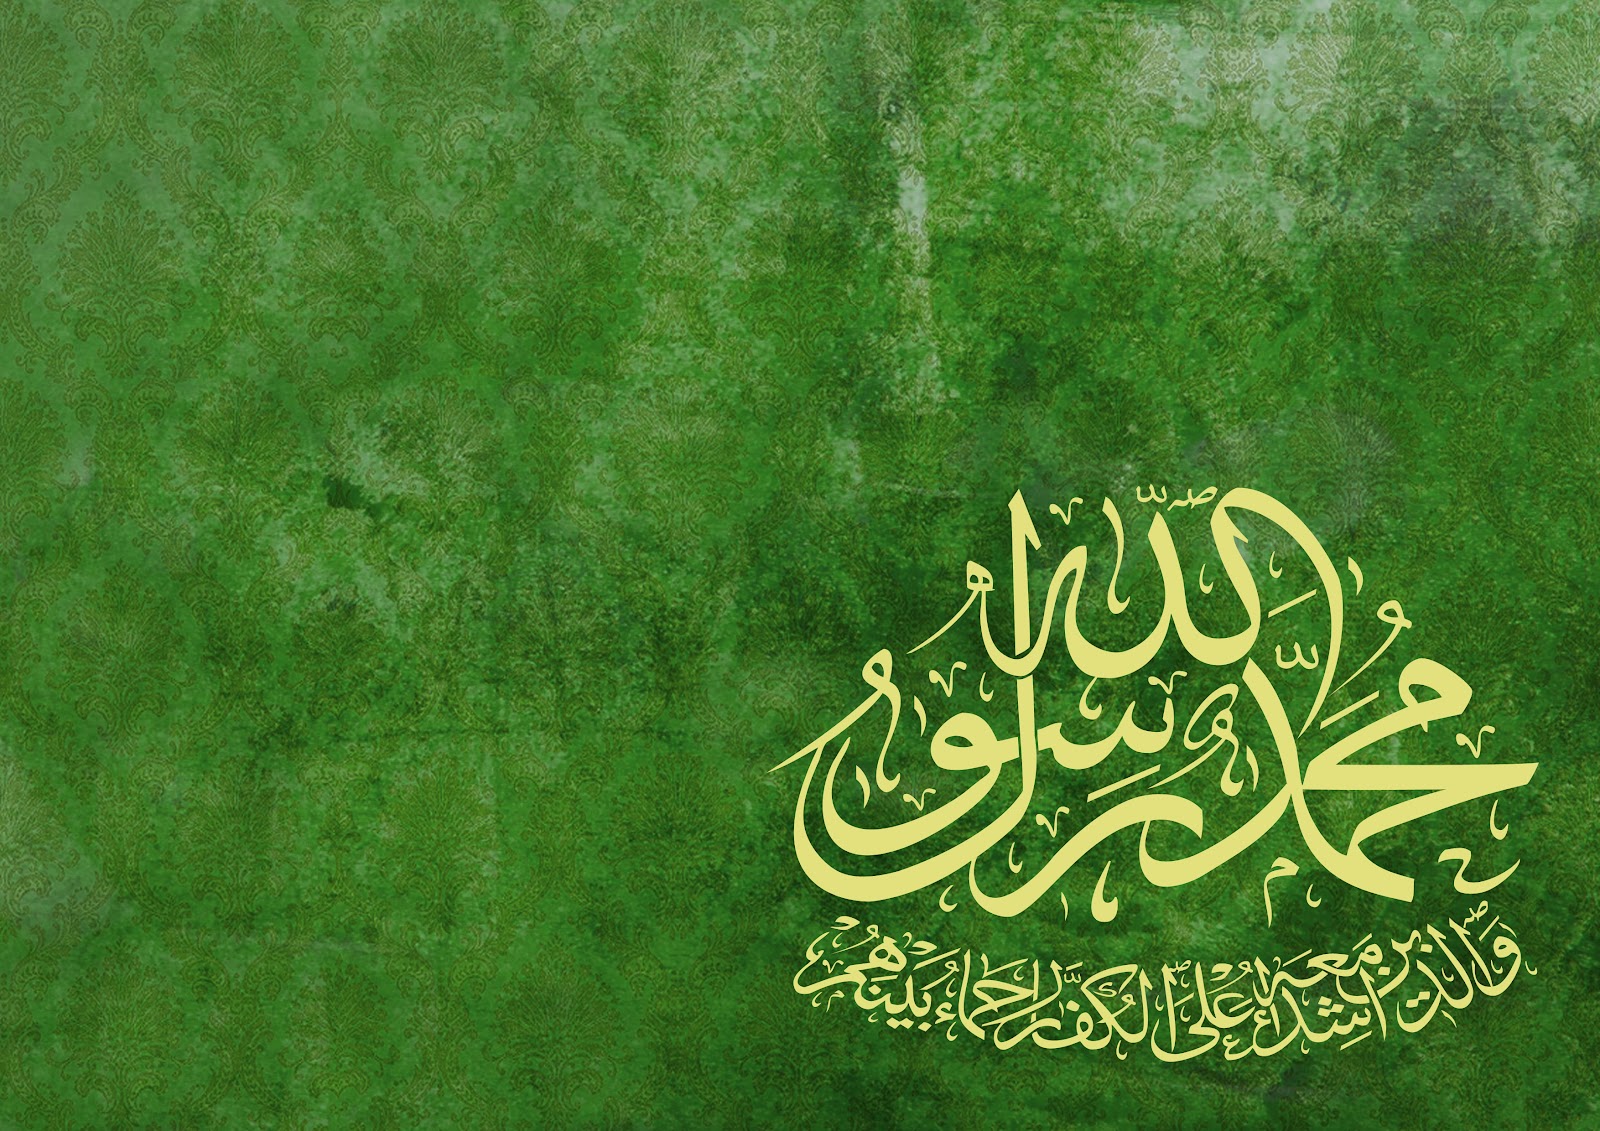 Islam The Perfect Religion Best Islamic Calligraphy Afalchi Free images wallpape [afalchi.blogspot.com]